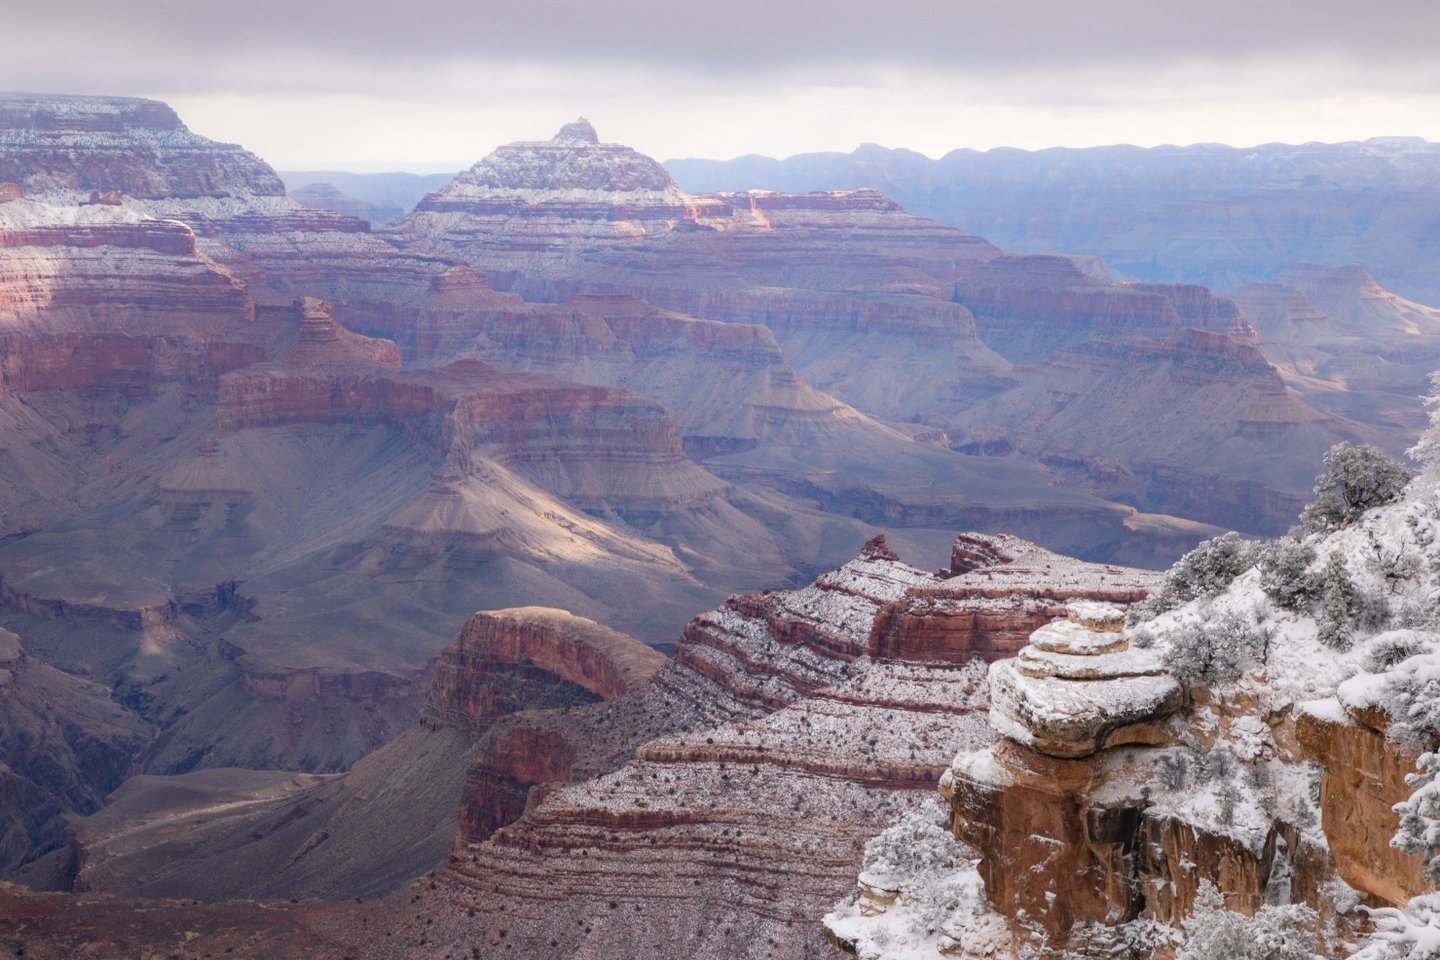  The Grand Canyon | Arizona, United States 